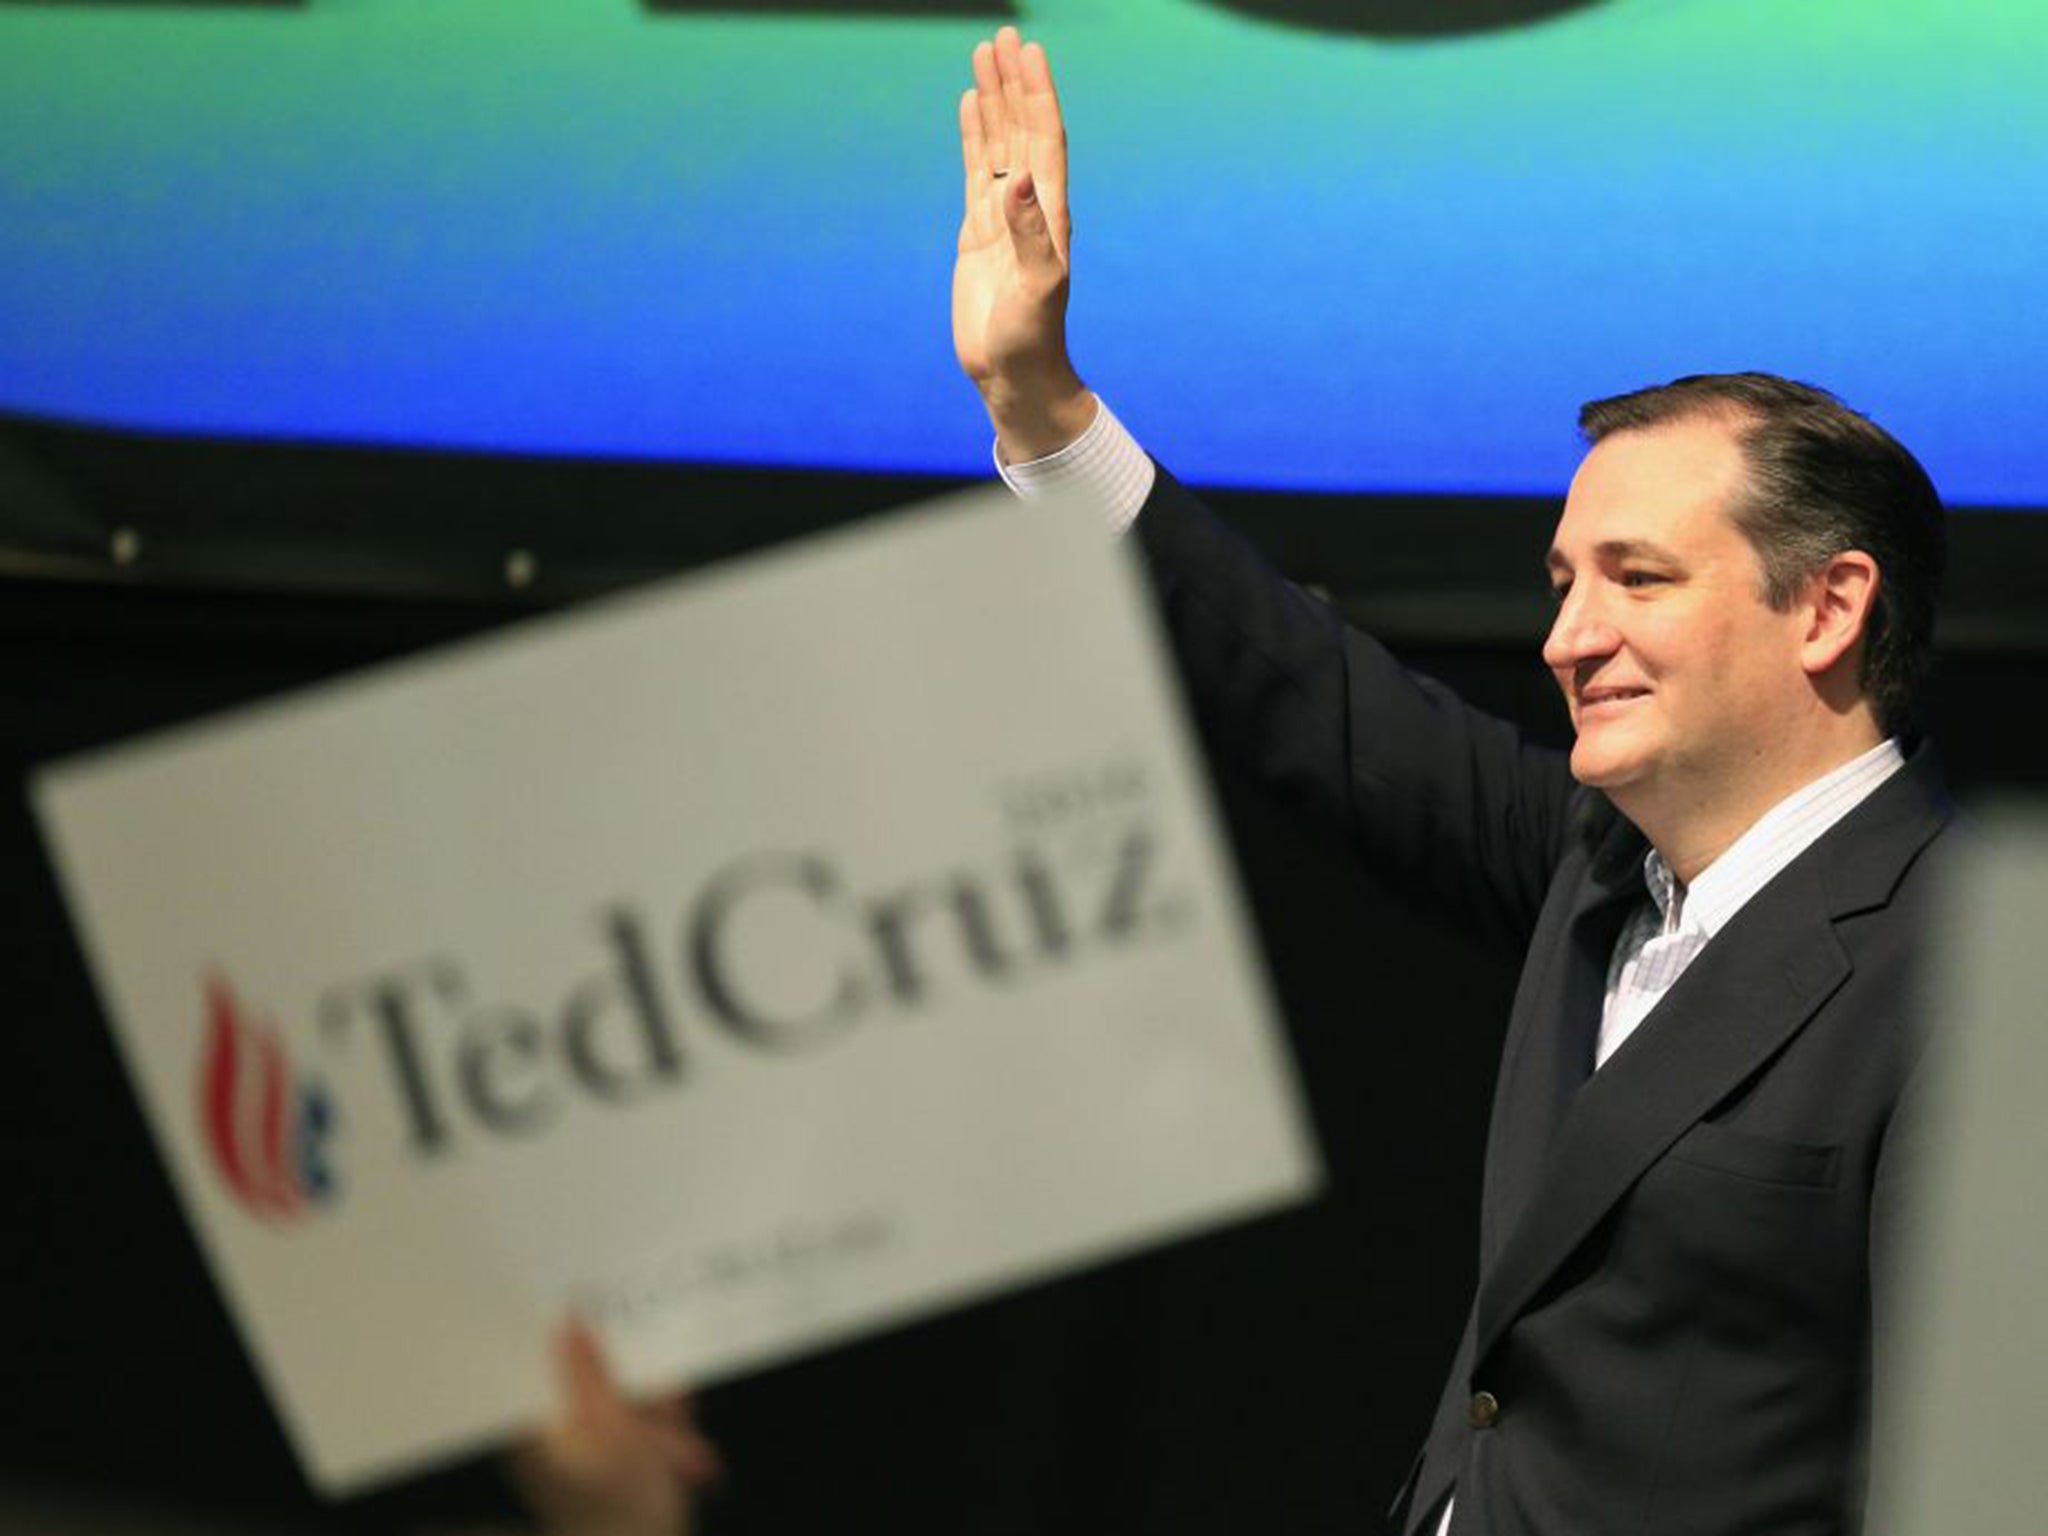 Texas Senator Ted Cruz has won the Republican caucuses in Kansas